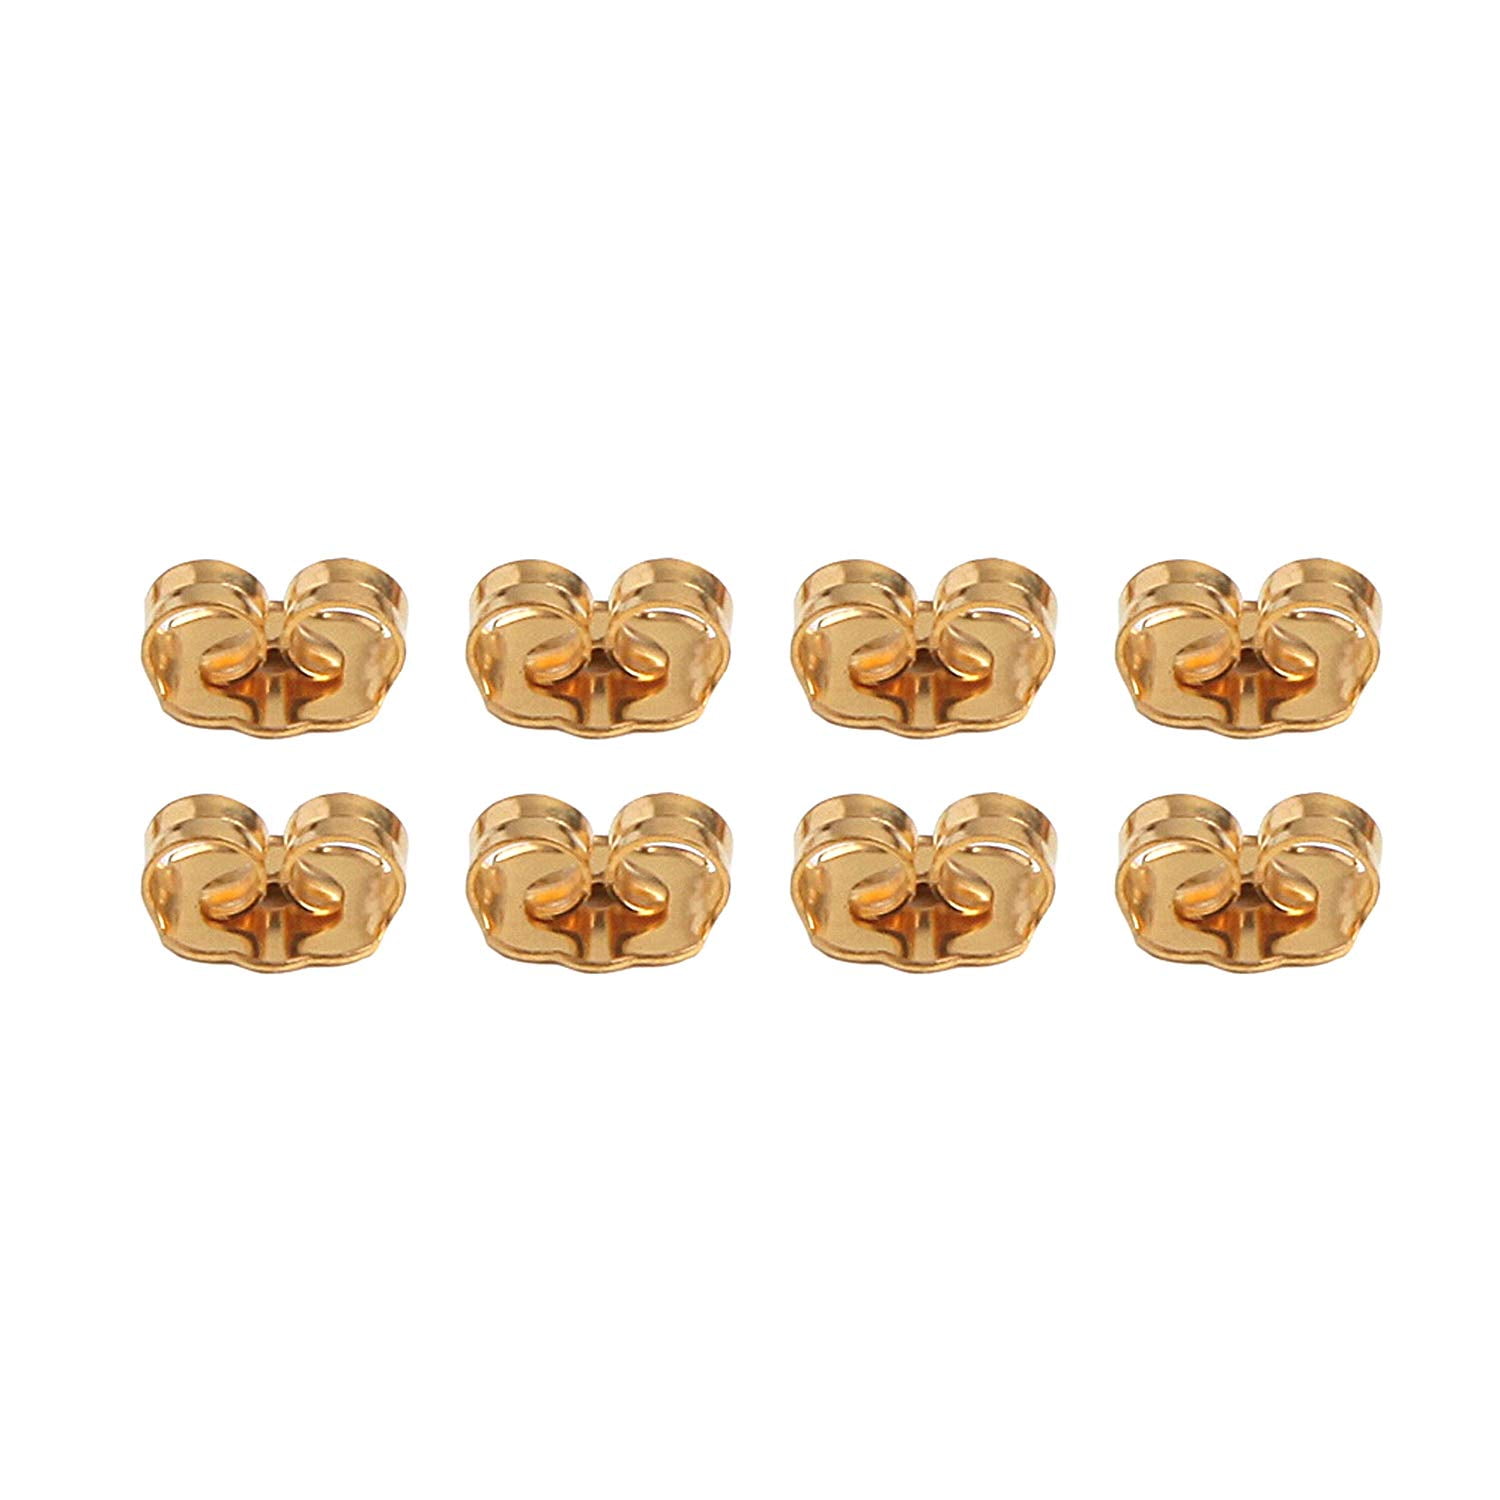 18k Gold Over Stainless Steel 4 Prong Earring Backing in 3 Sizes and  Butterfly Earring Backs - JMKIT498